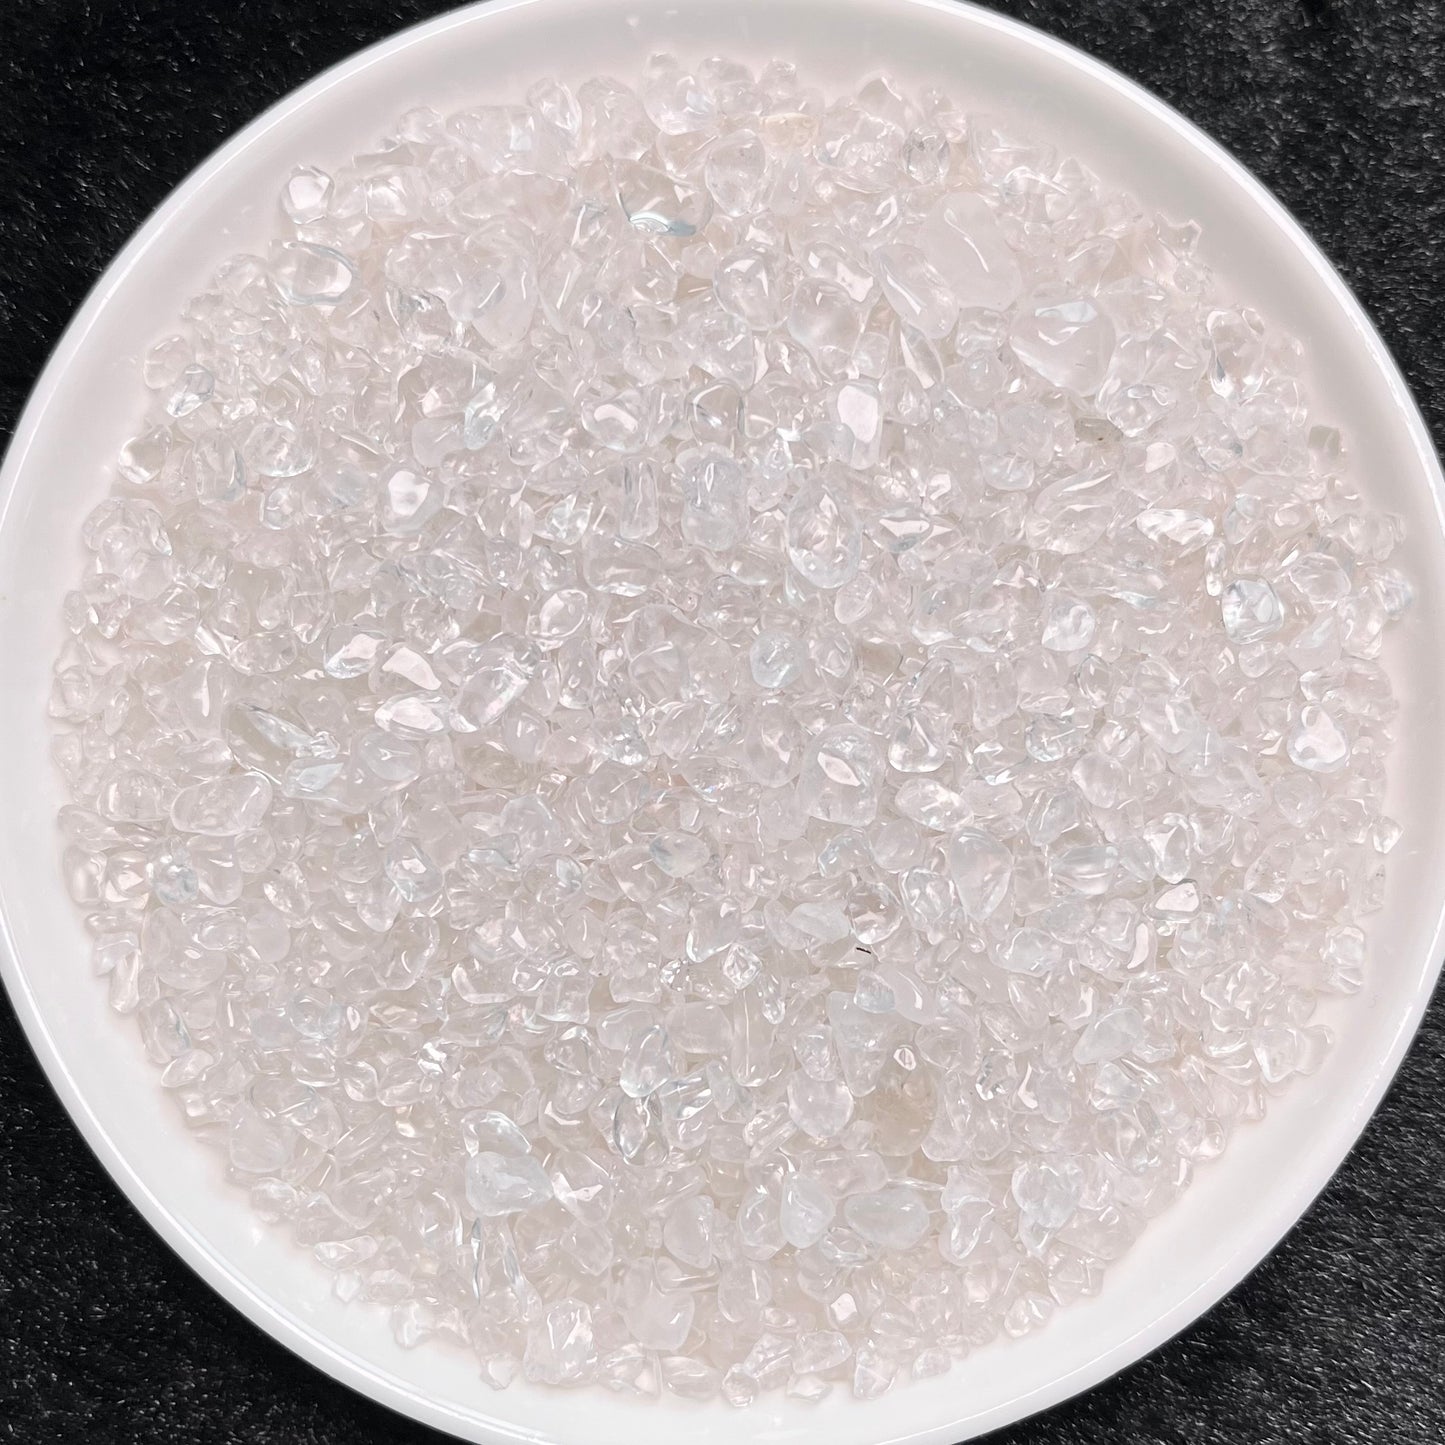 Nature Crystal chip 100garm bag